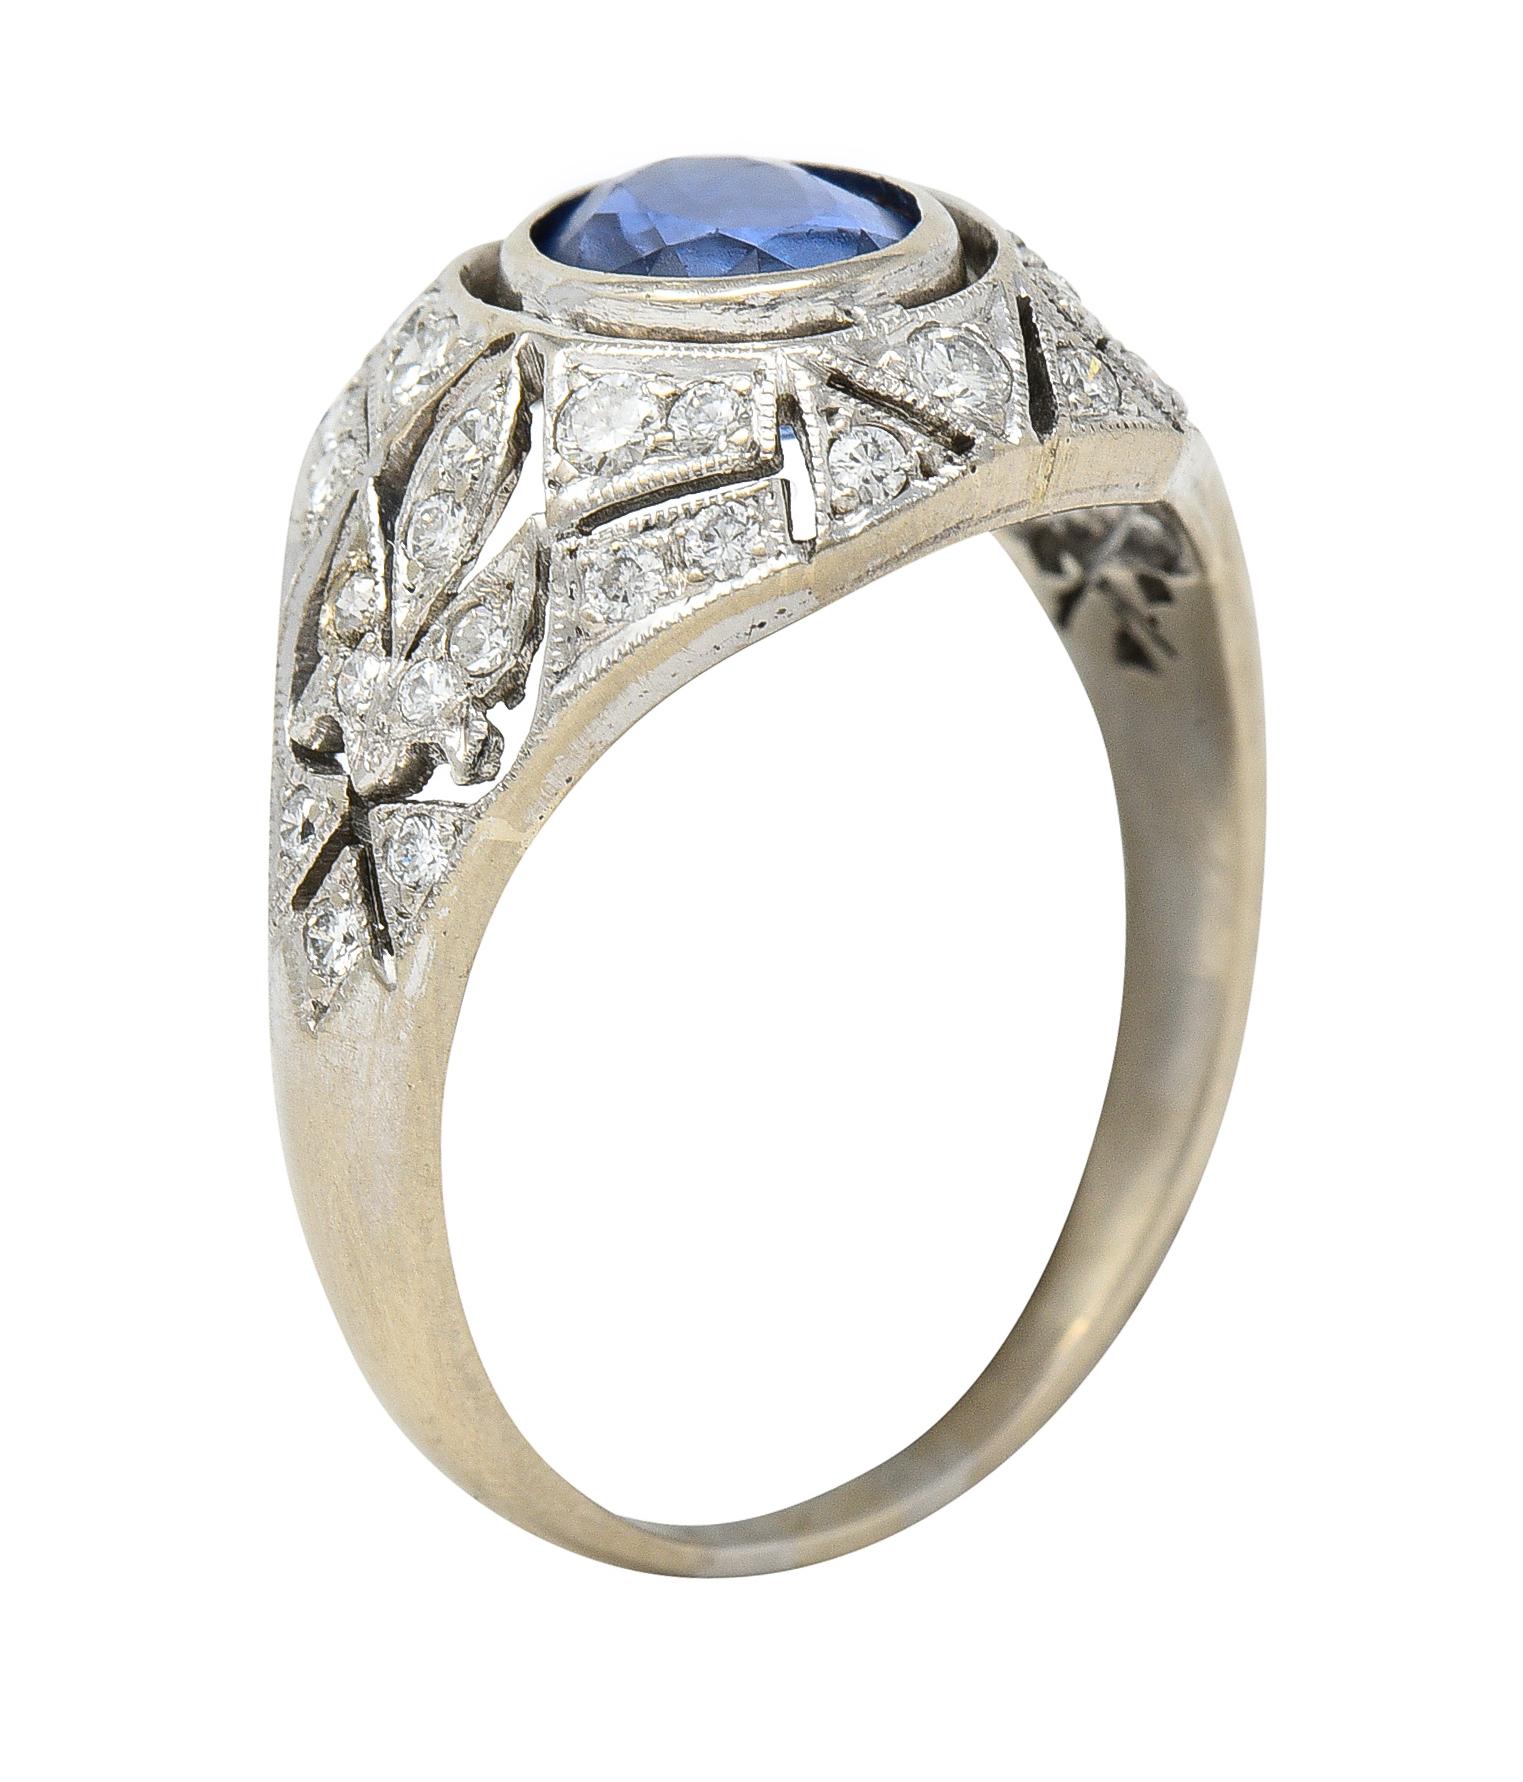 1960s Art Deco Revival 1.72 Carats Sapphire Diamond 14 Karat White Gold Ring 5